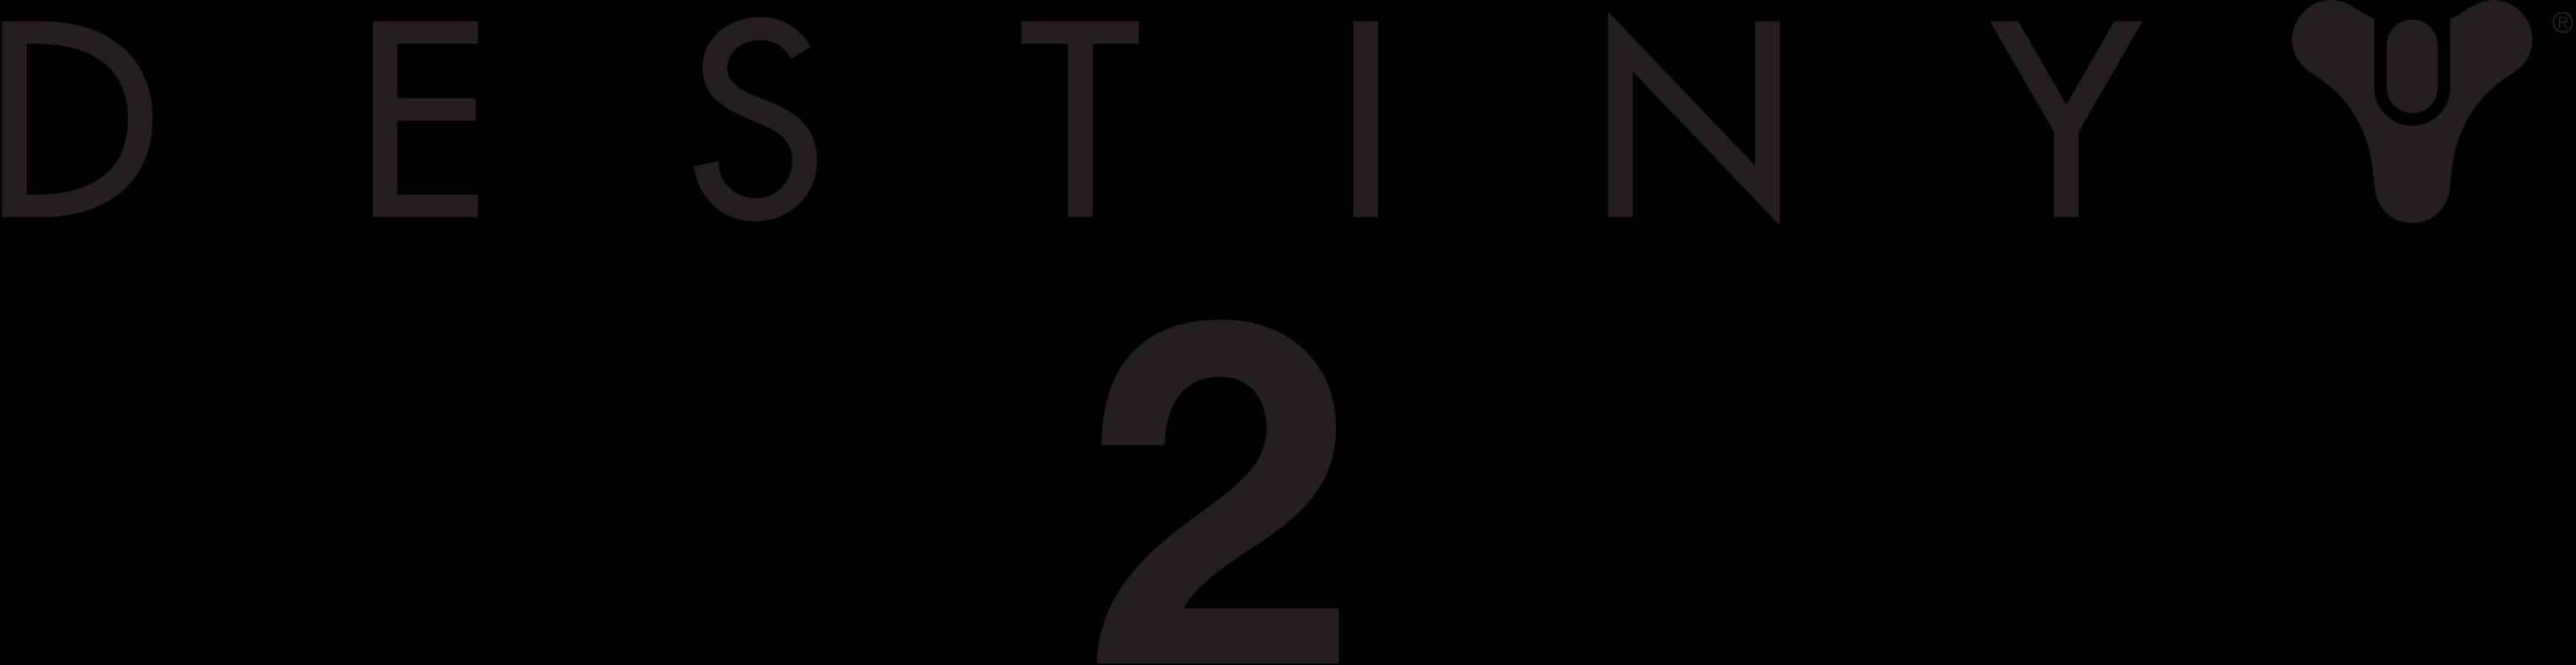 Destiny 2 Logo With The Word Destiny Wallpaper